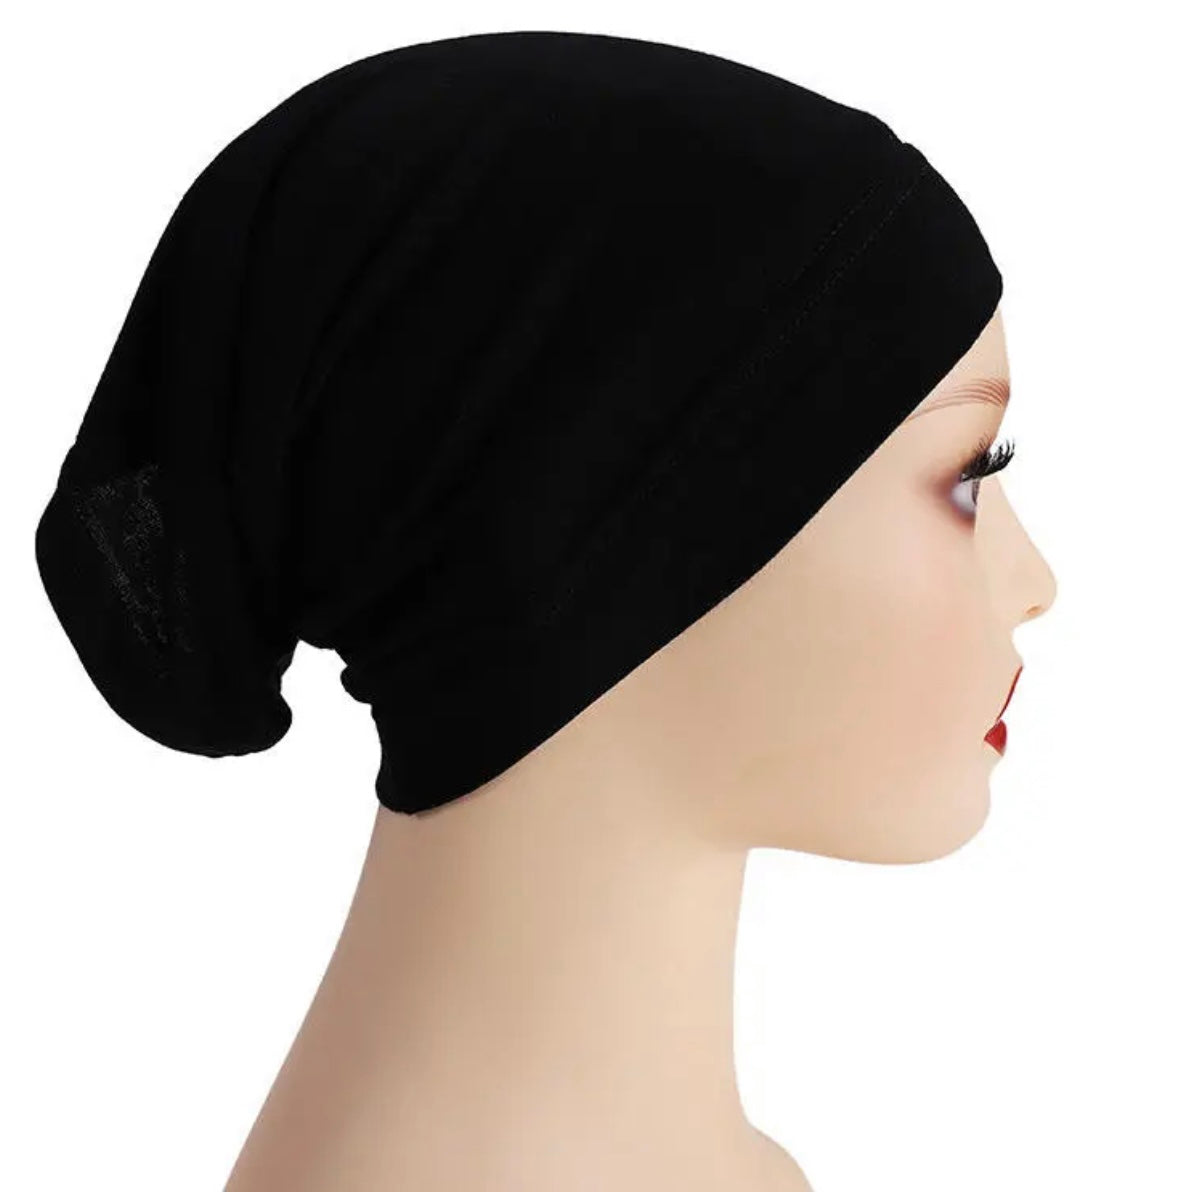 Hijab cap: Black